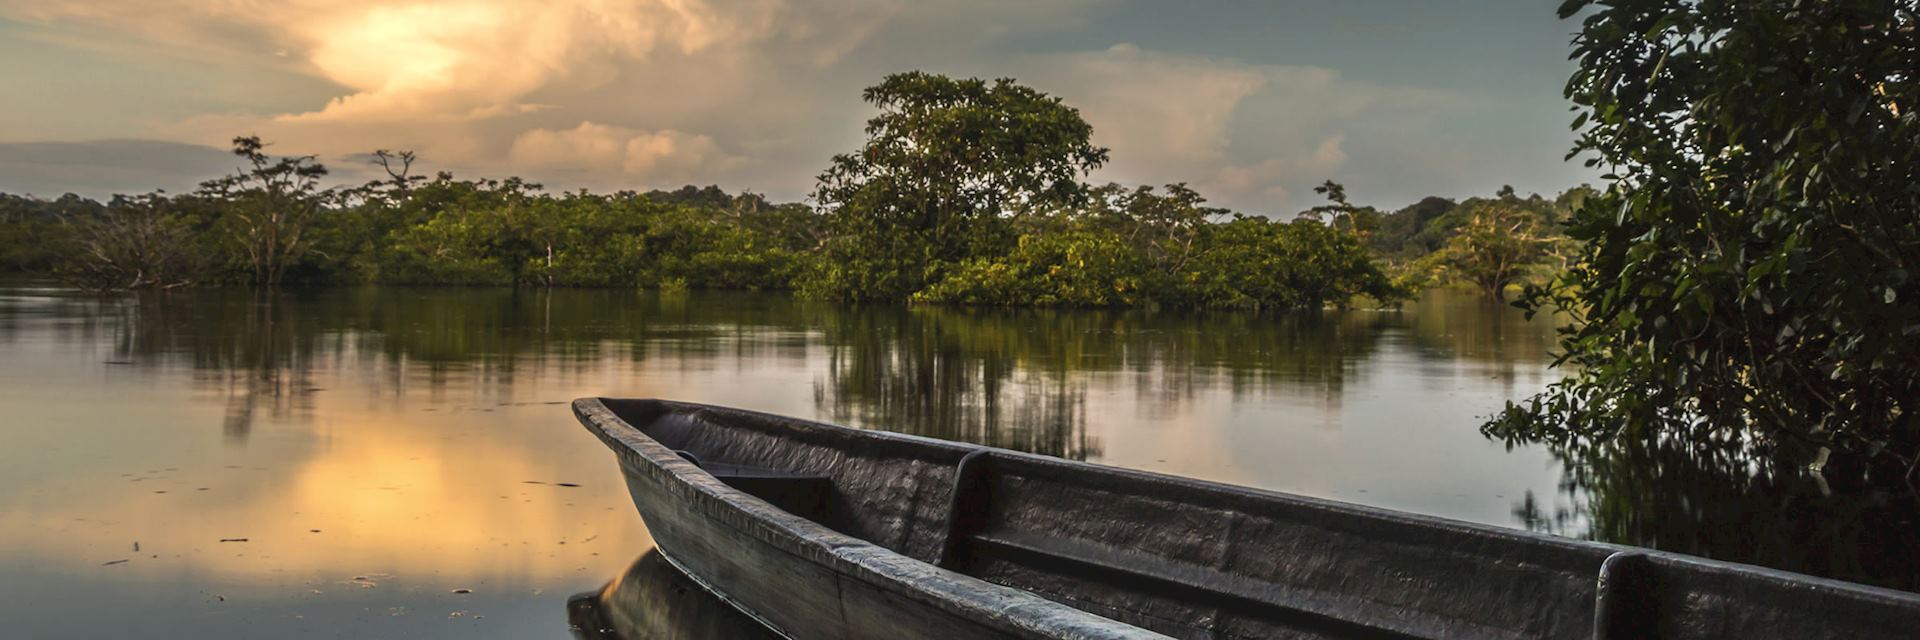 The Amazonian rainforest in Ecuador